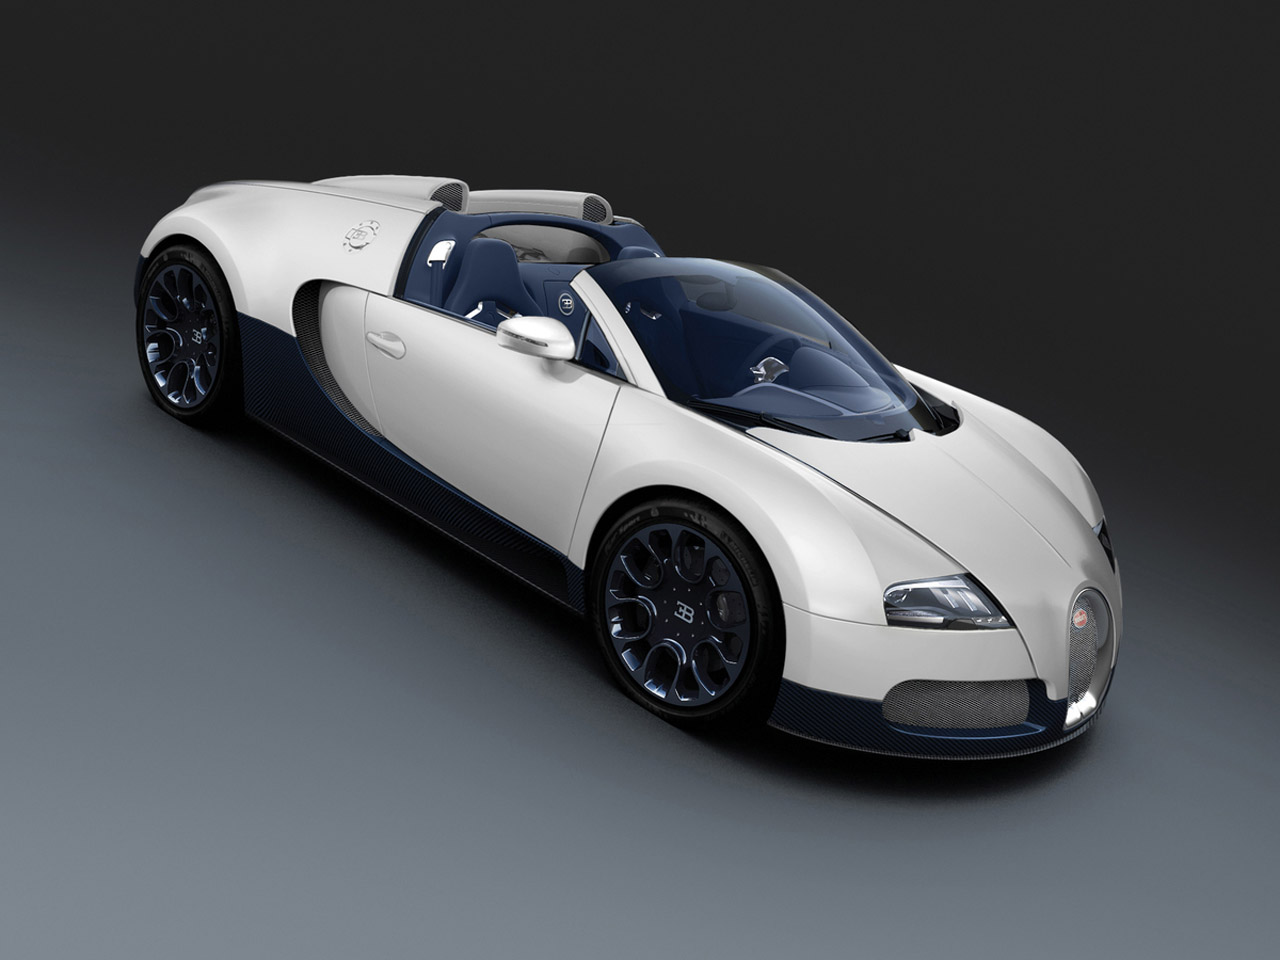 Asian special edition Bugatti Veyron